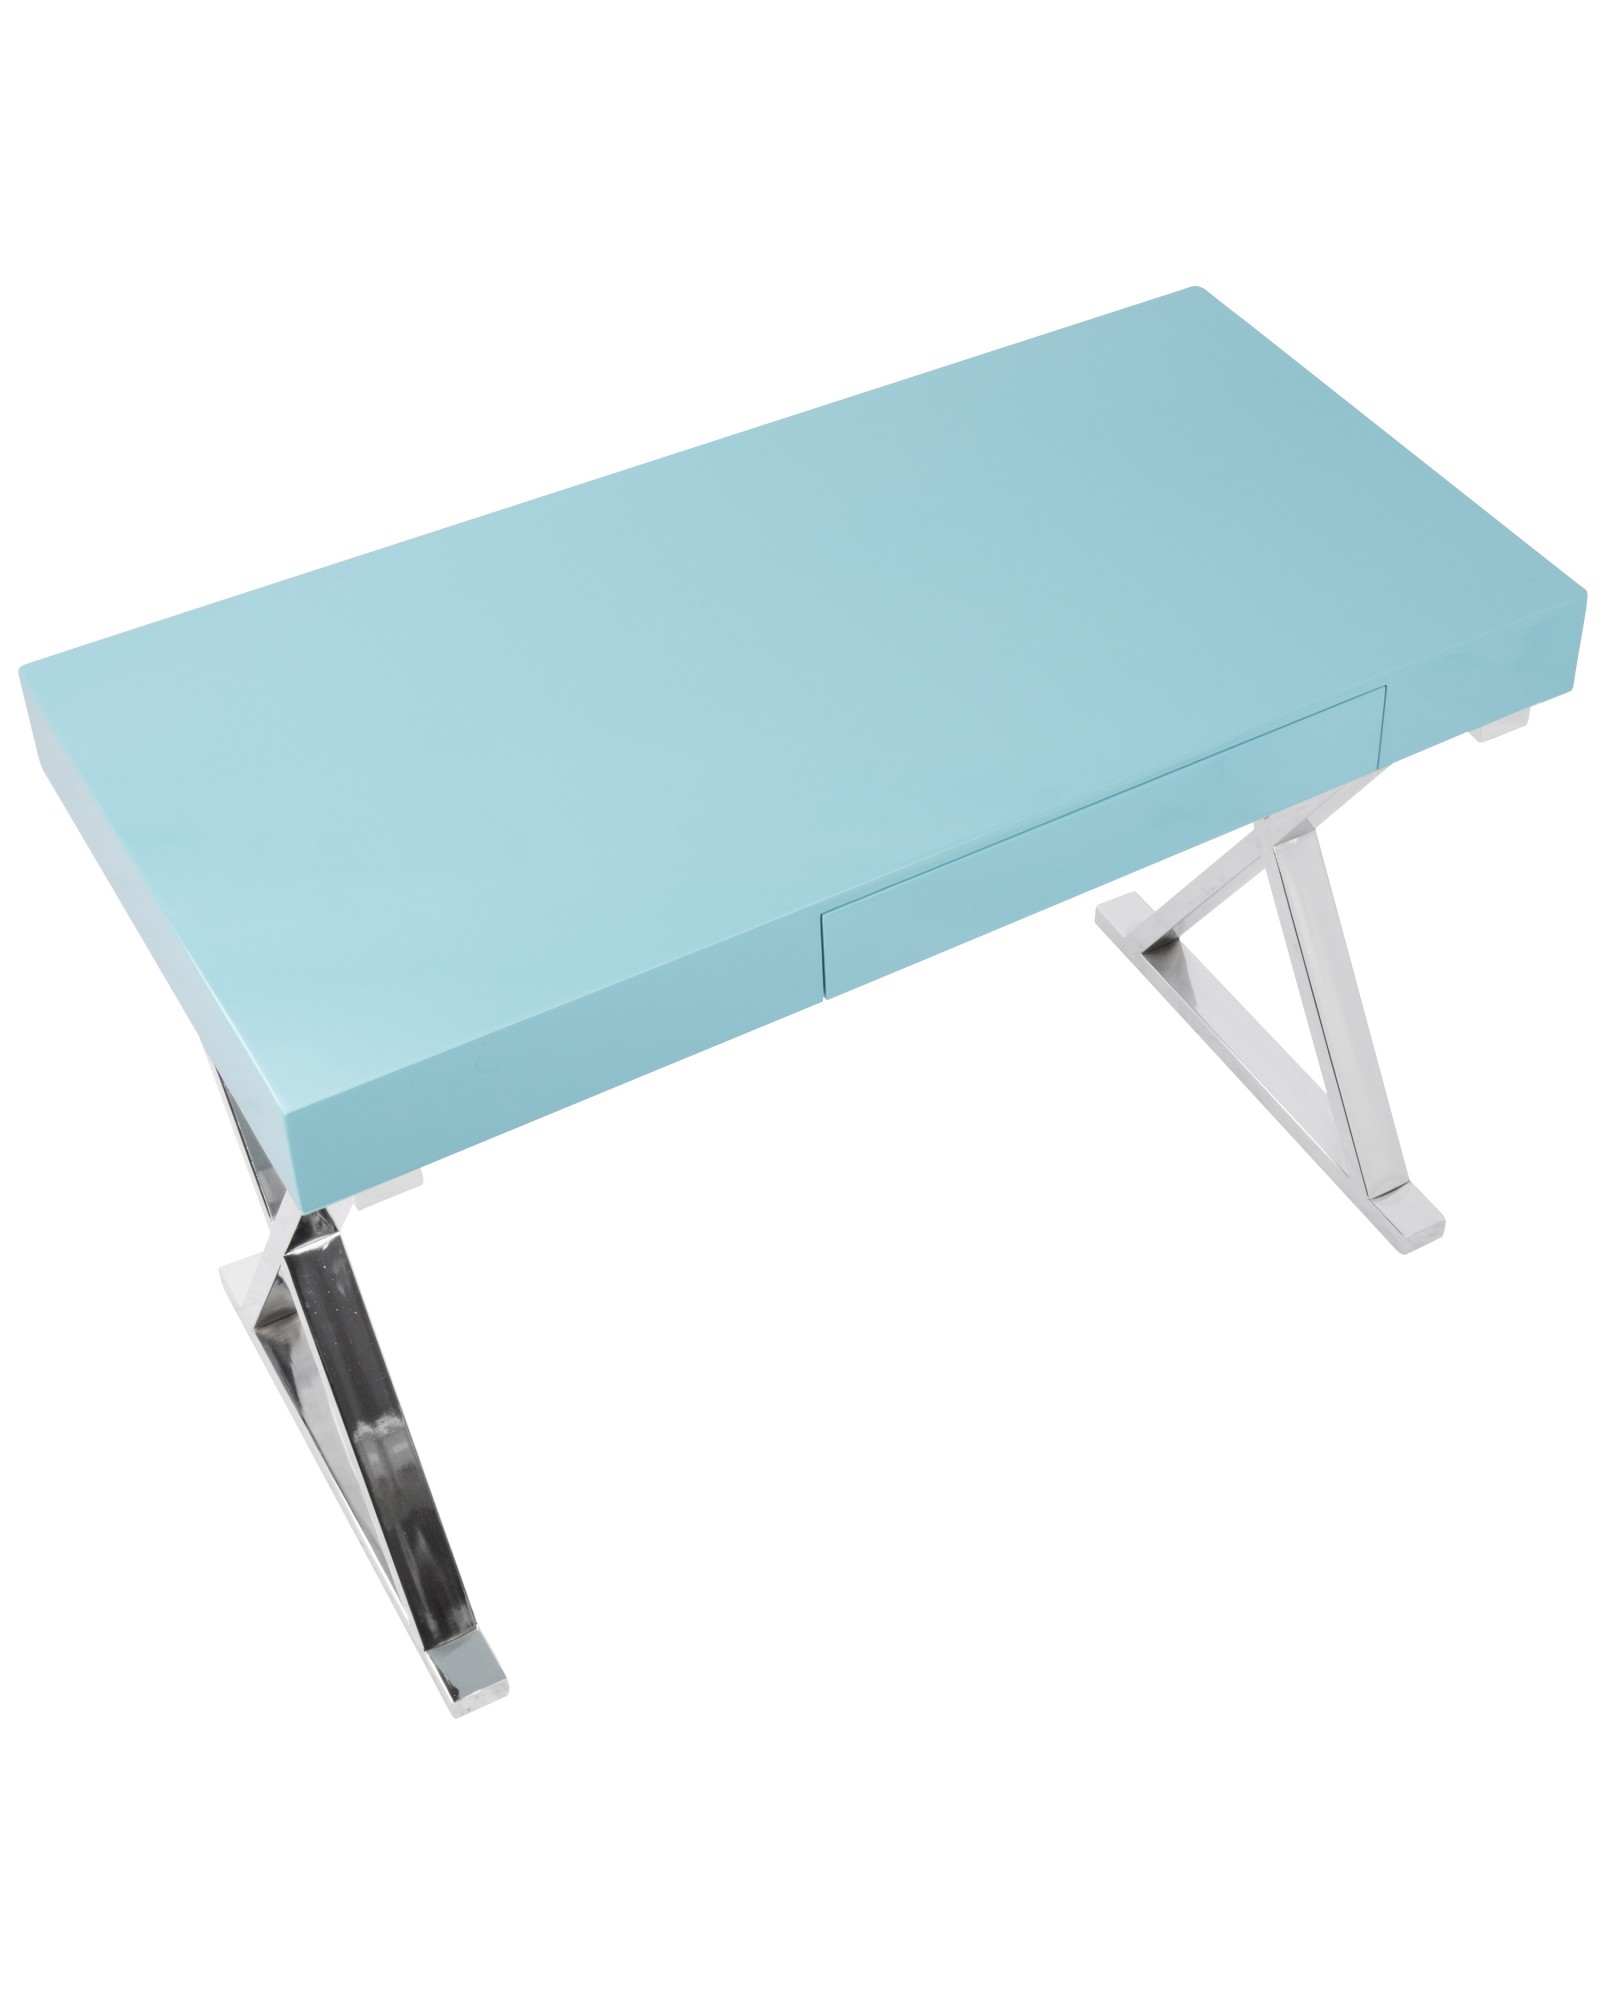 Luster Contemporary Desk in Light Blue